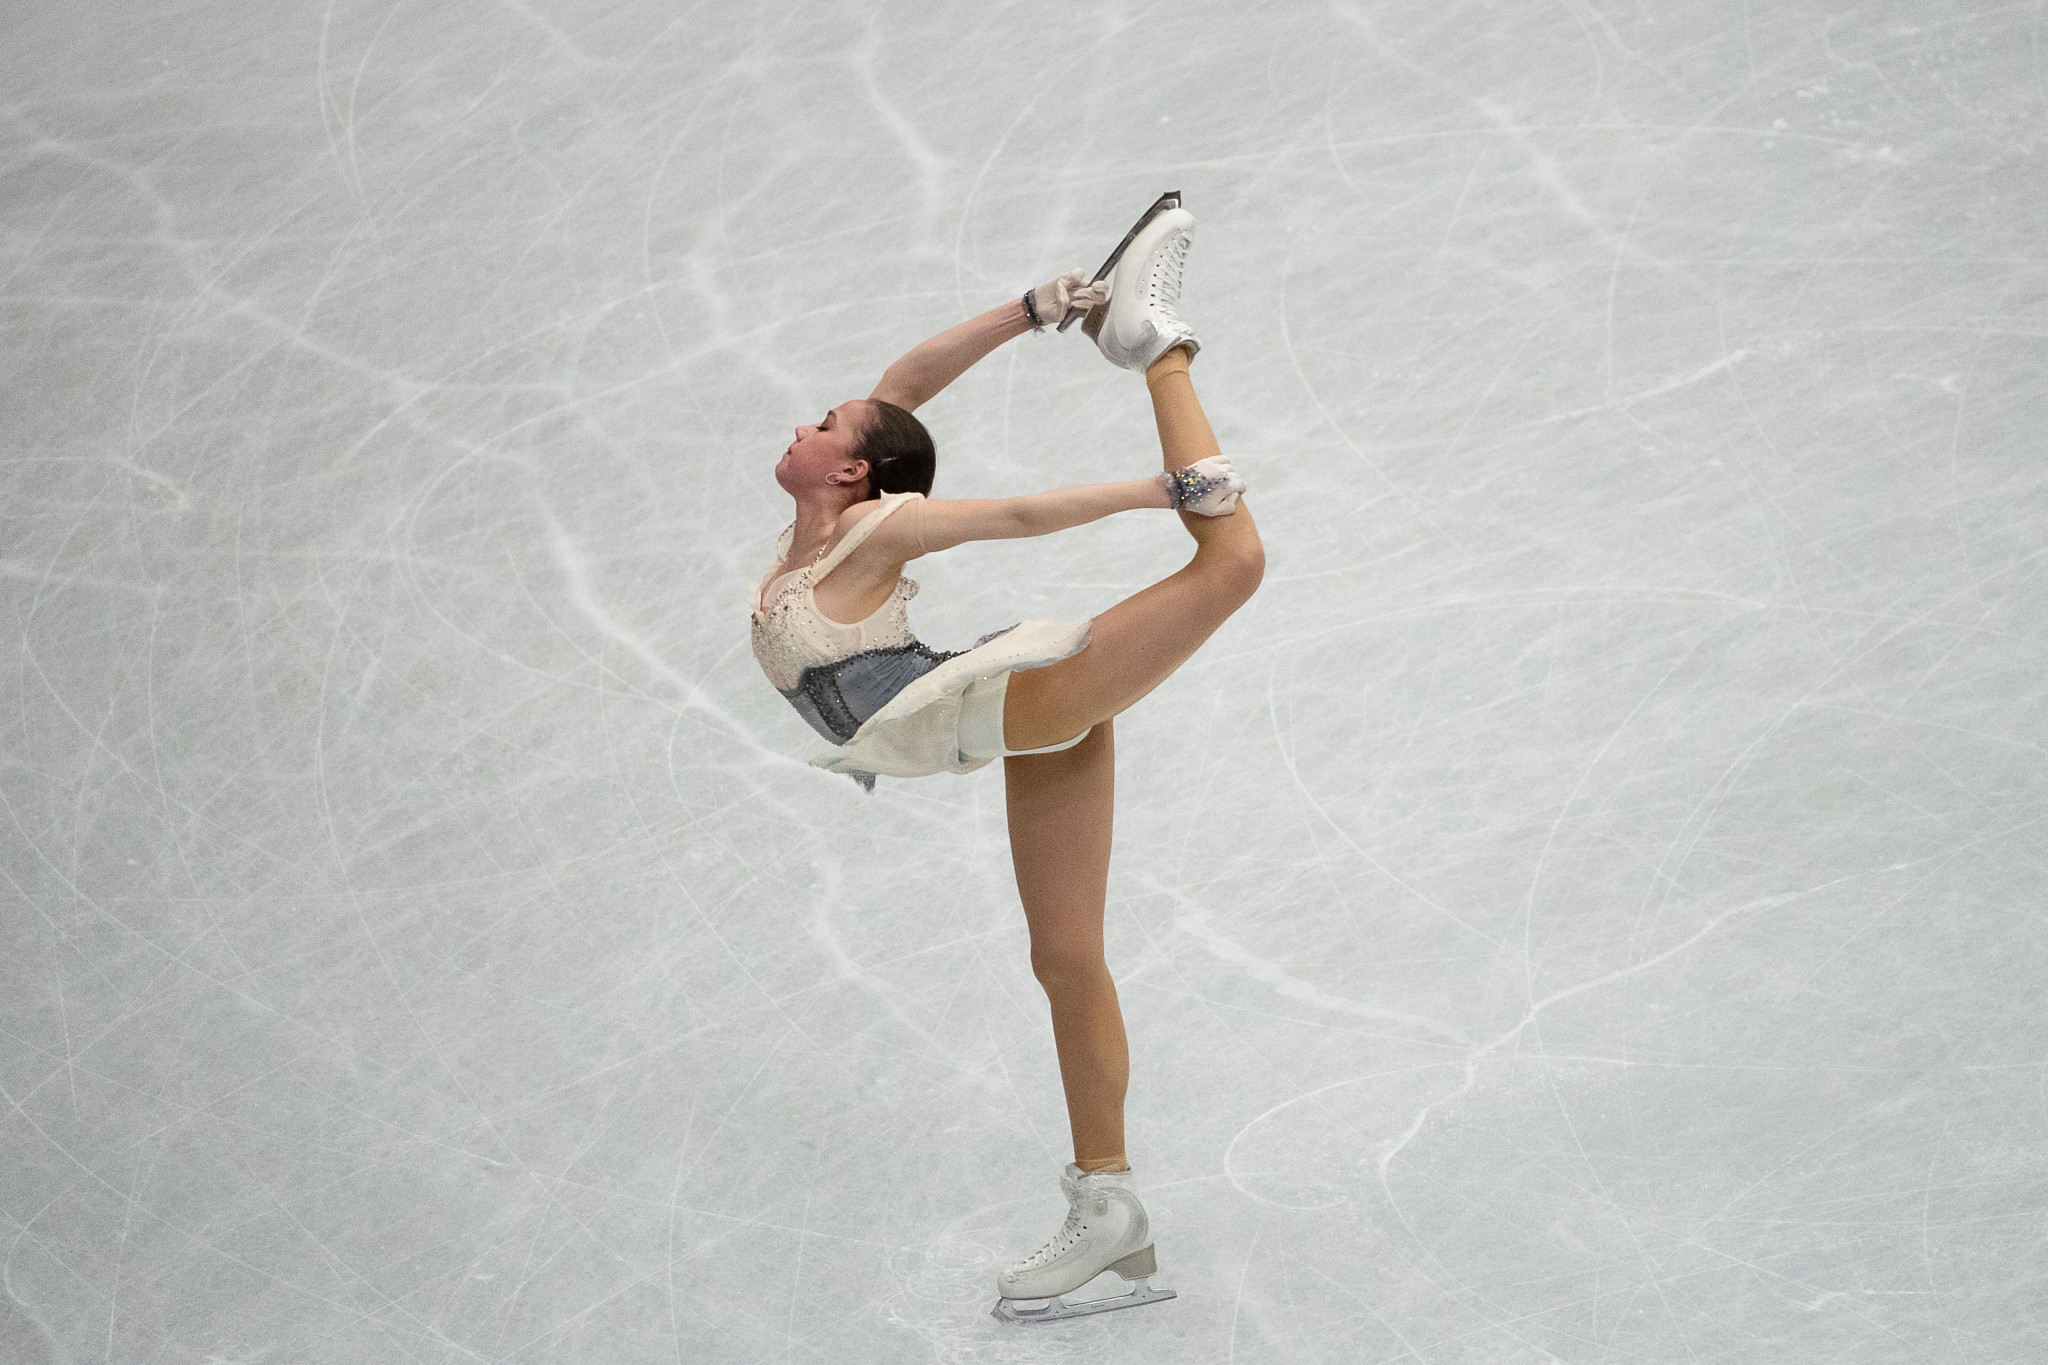 Olympic champion Zagitova claims halfway lead at World Figure Skating Championships 